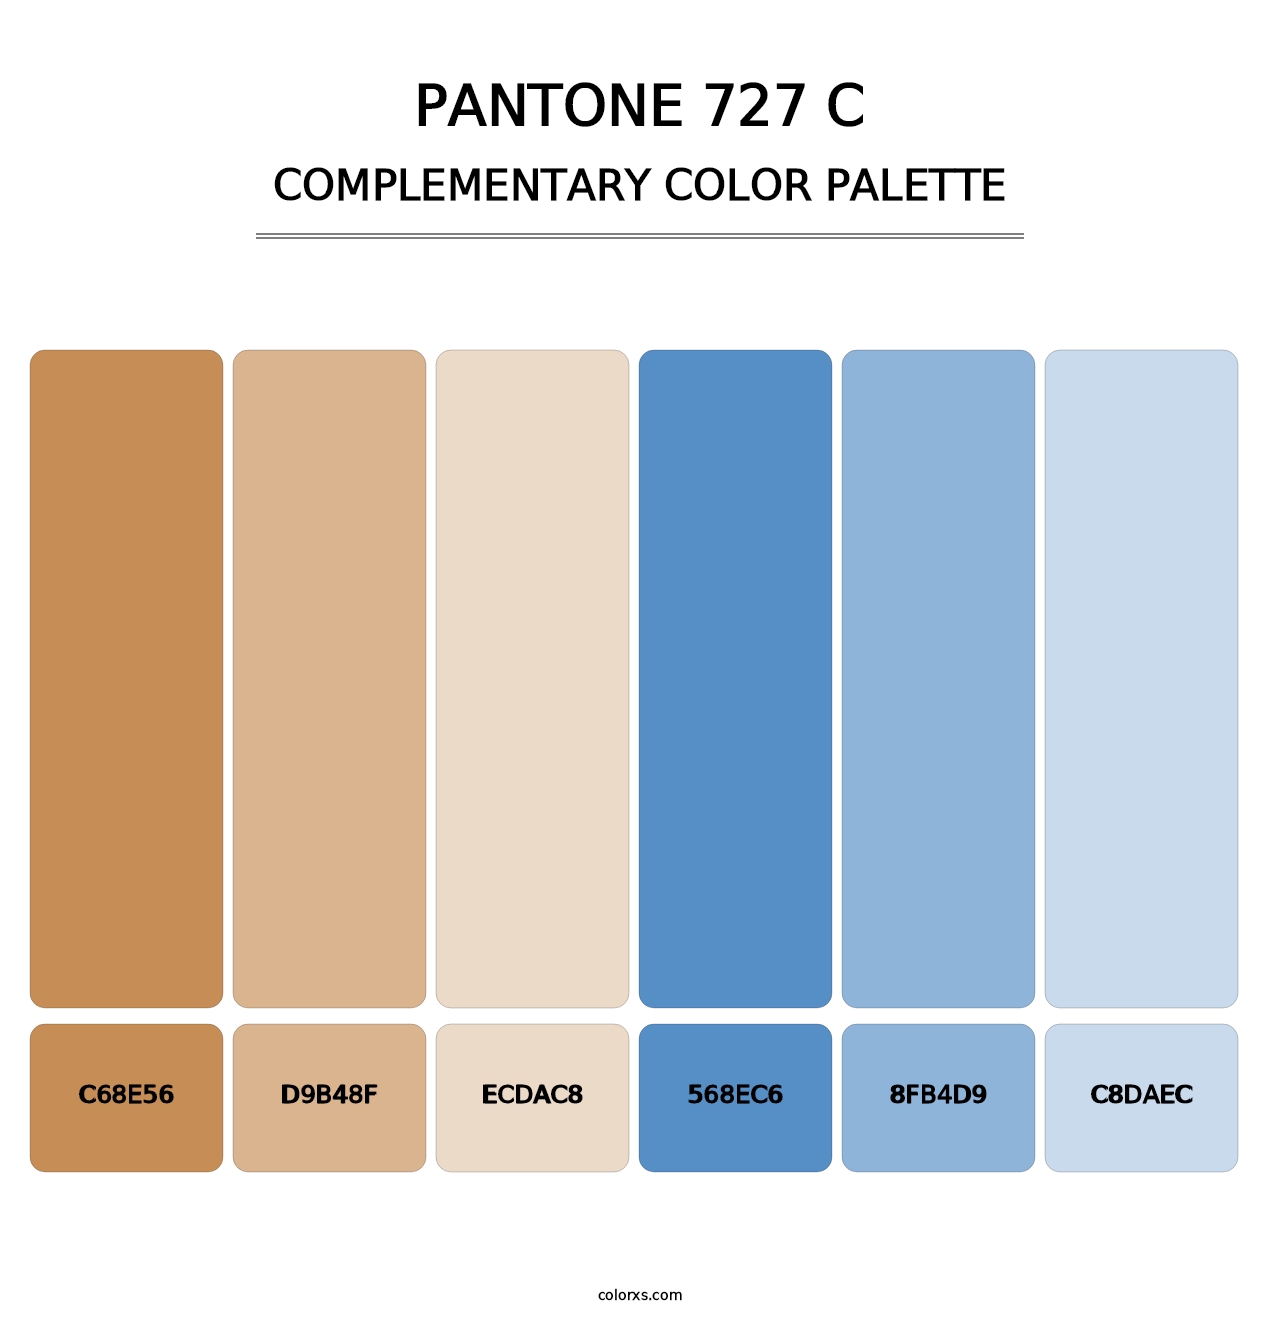 PANTONE 727 C - Complementary Color Palette